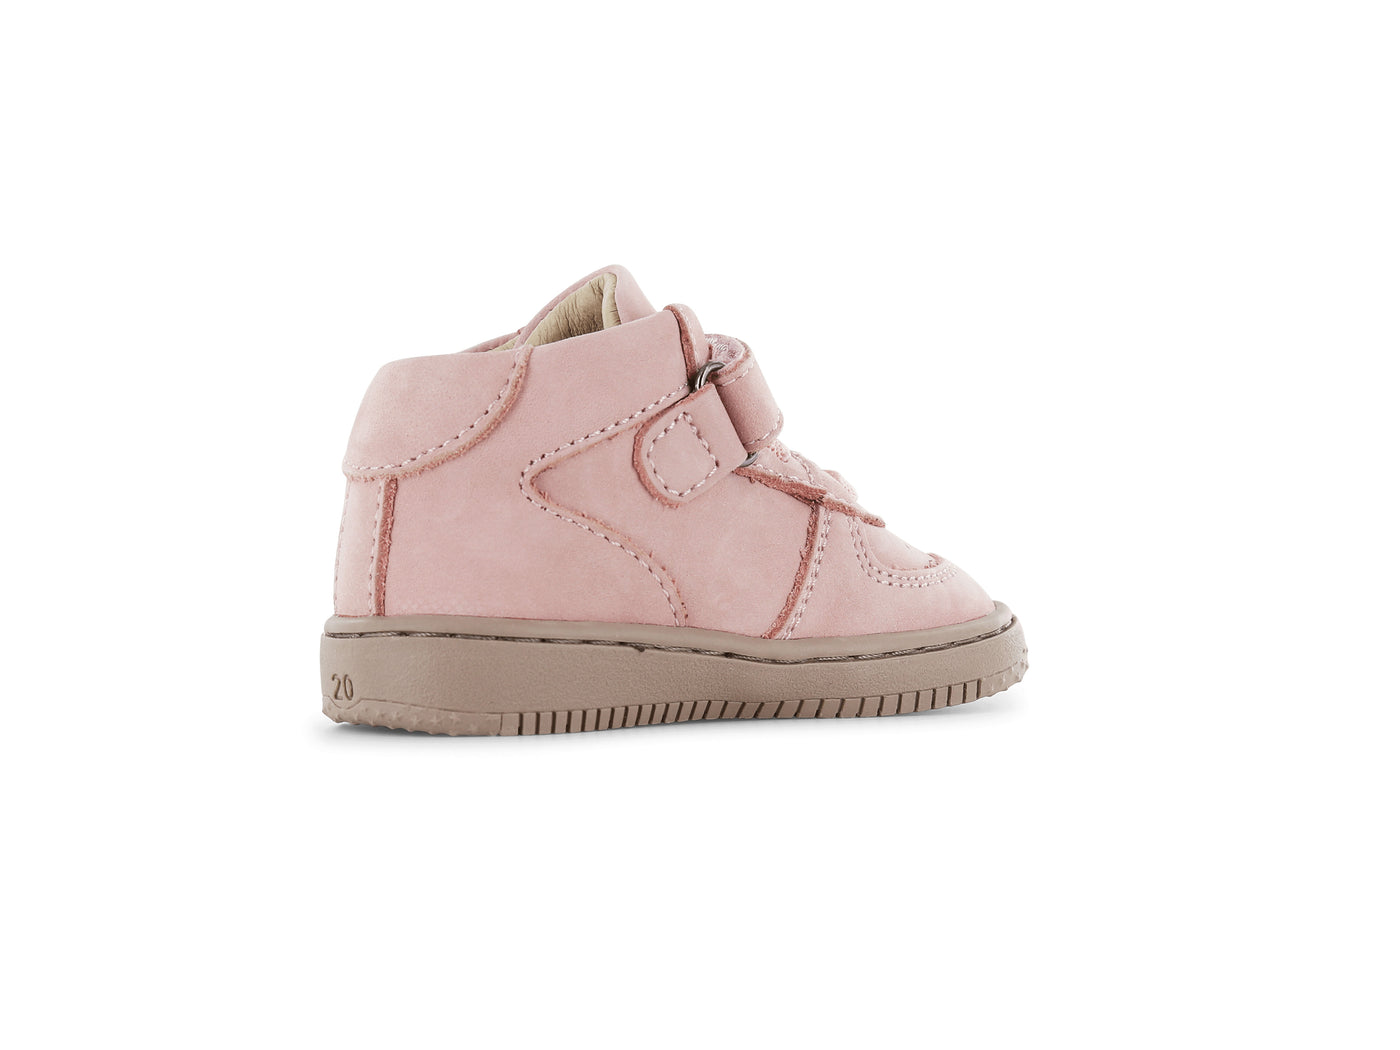 Shoesme W23 Babyproof Pink BN22W001-E